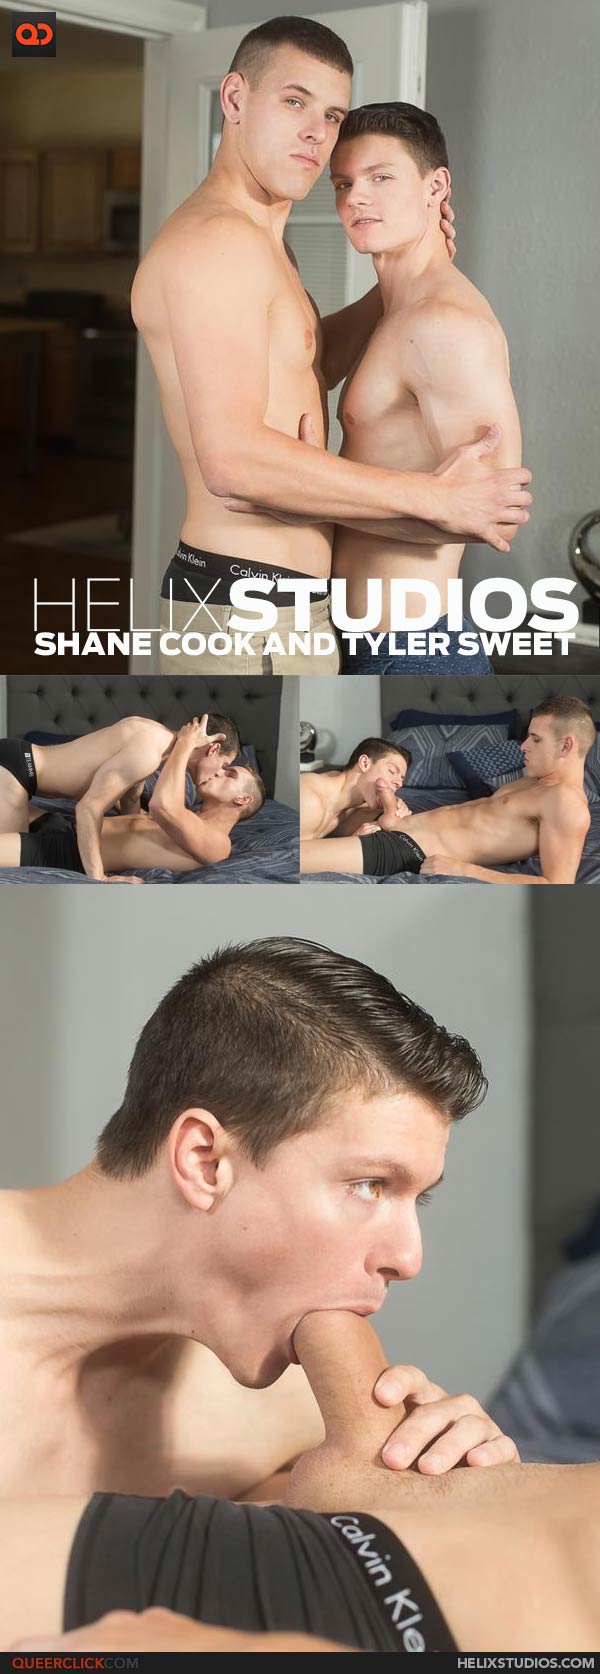 Helix Studios: Shane Cook and Tyler Sweet